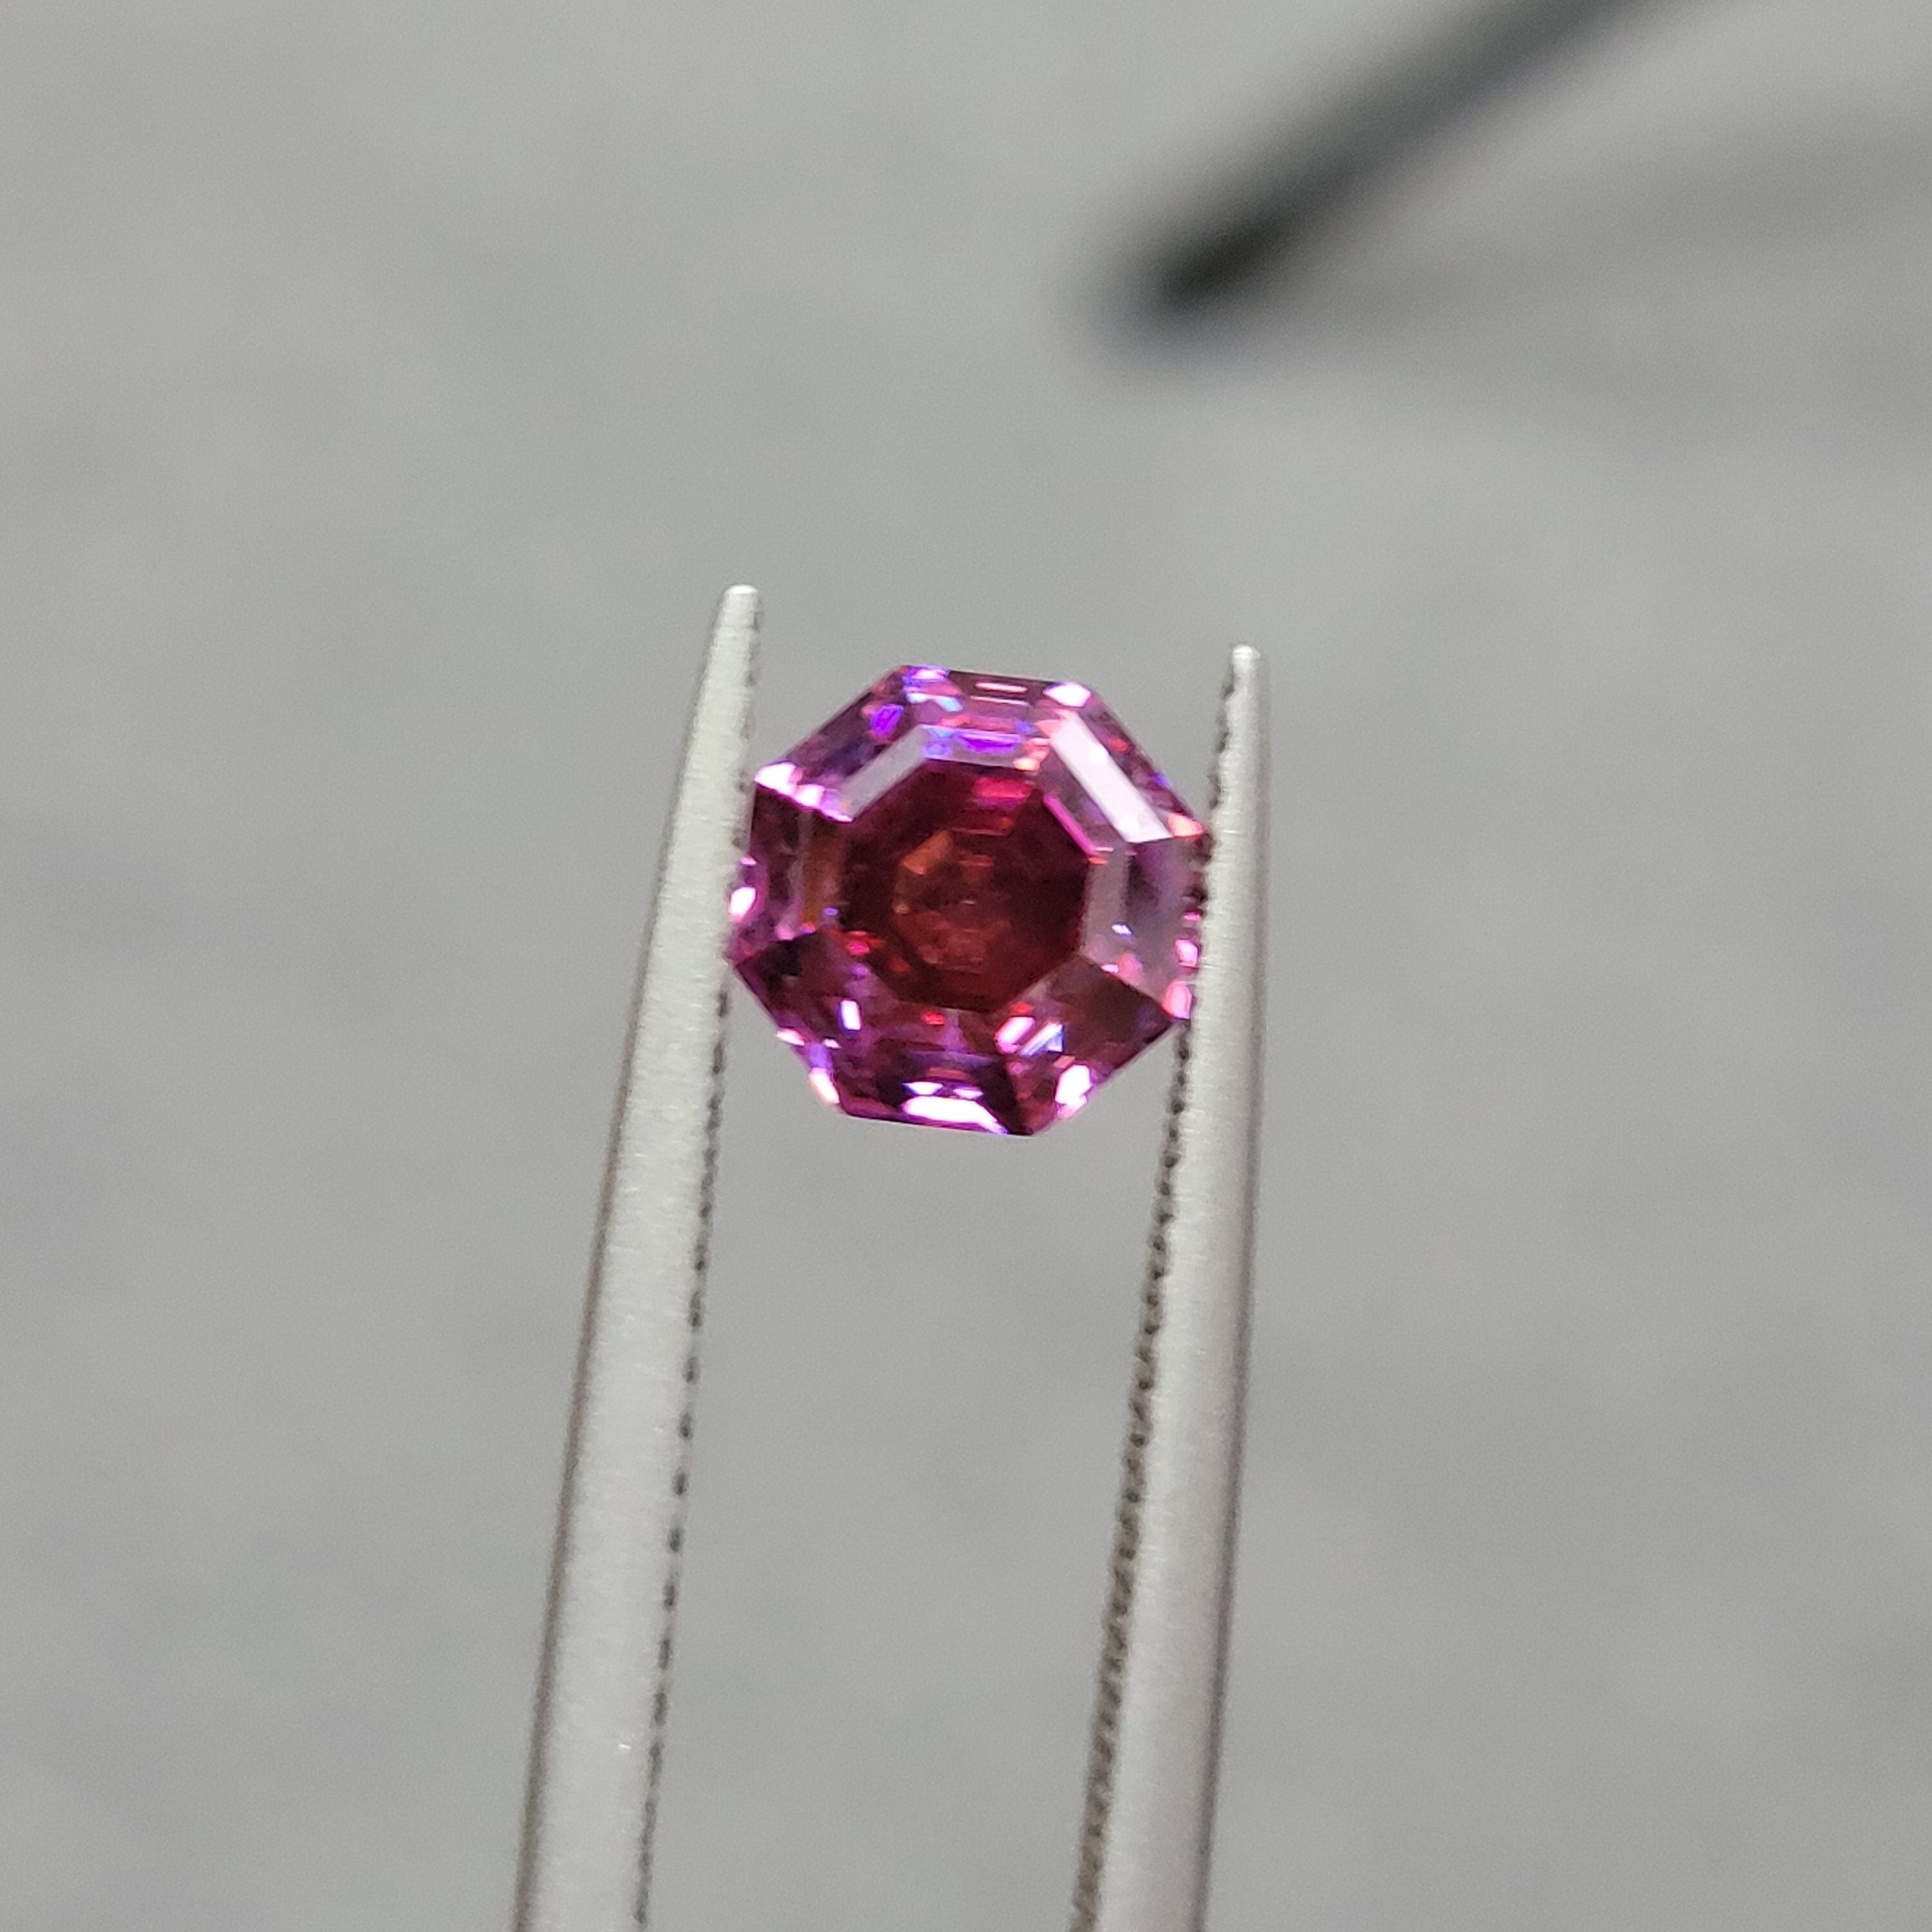 7mm 2ct loose moissanite certified vvs1 purplish red octagon cut gra laboratory gemstone